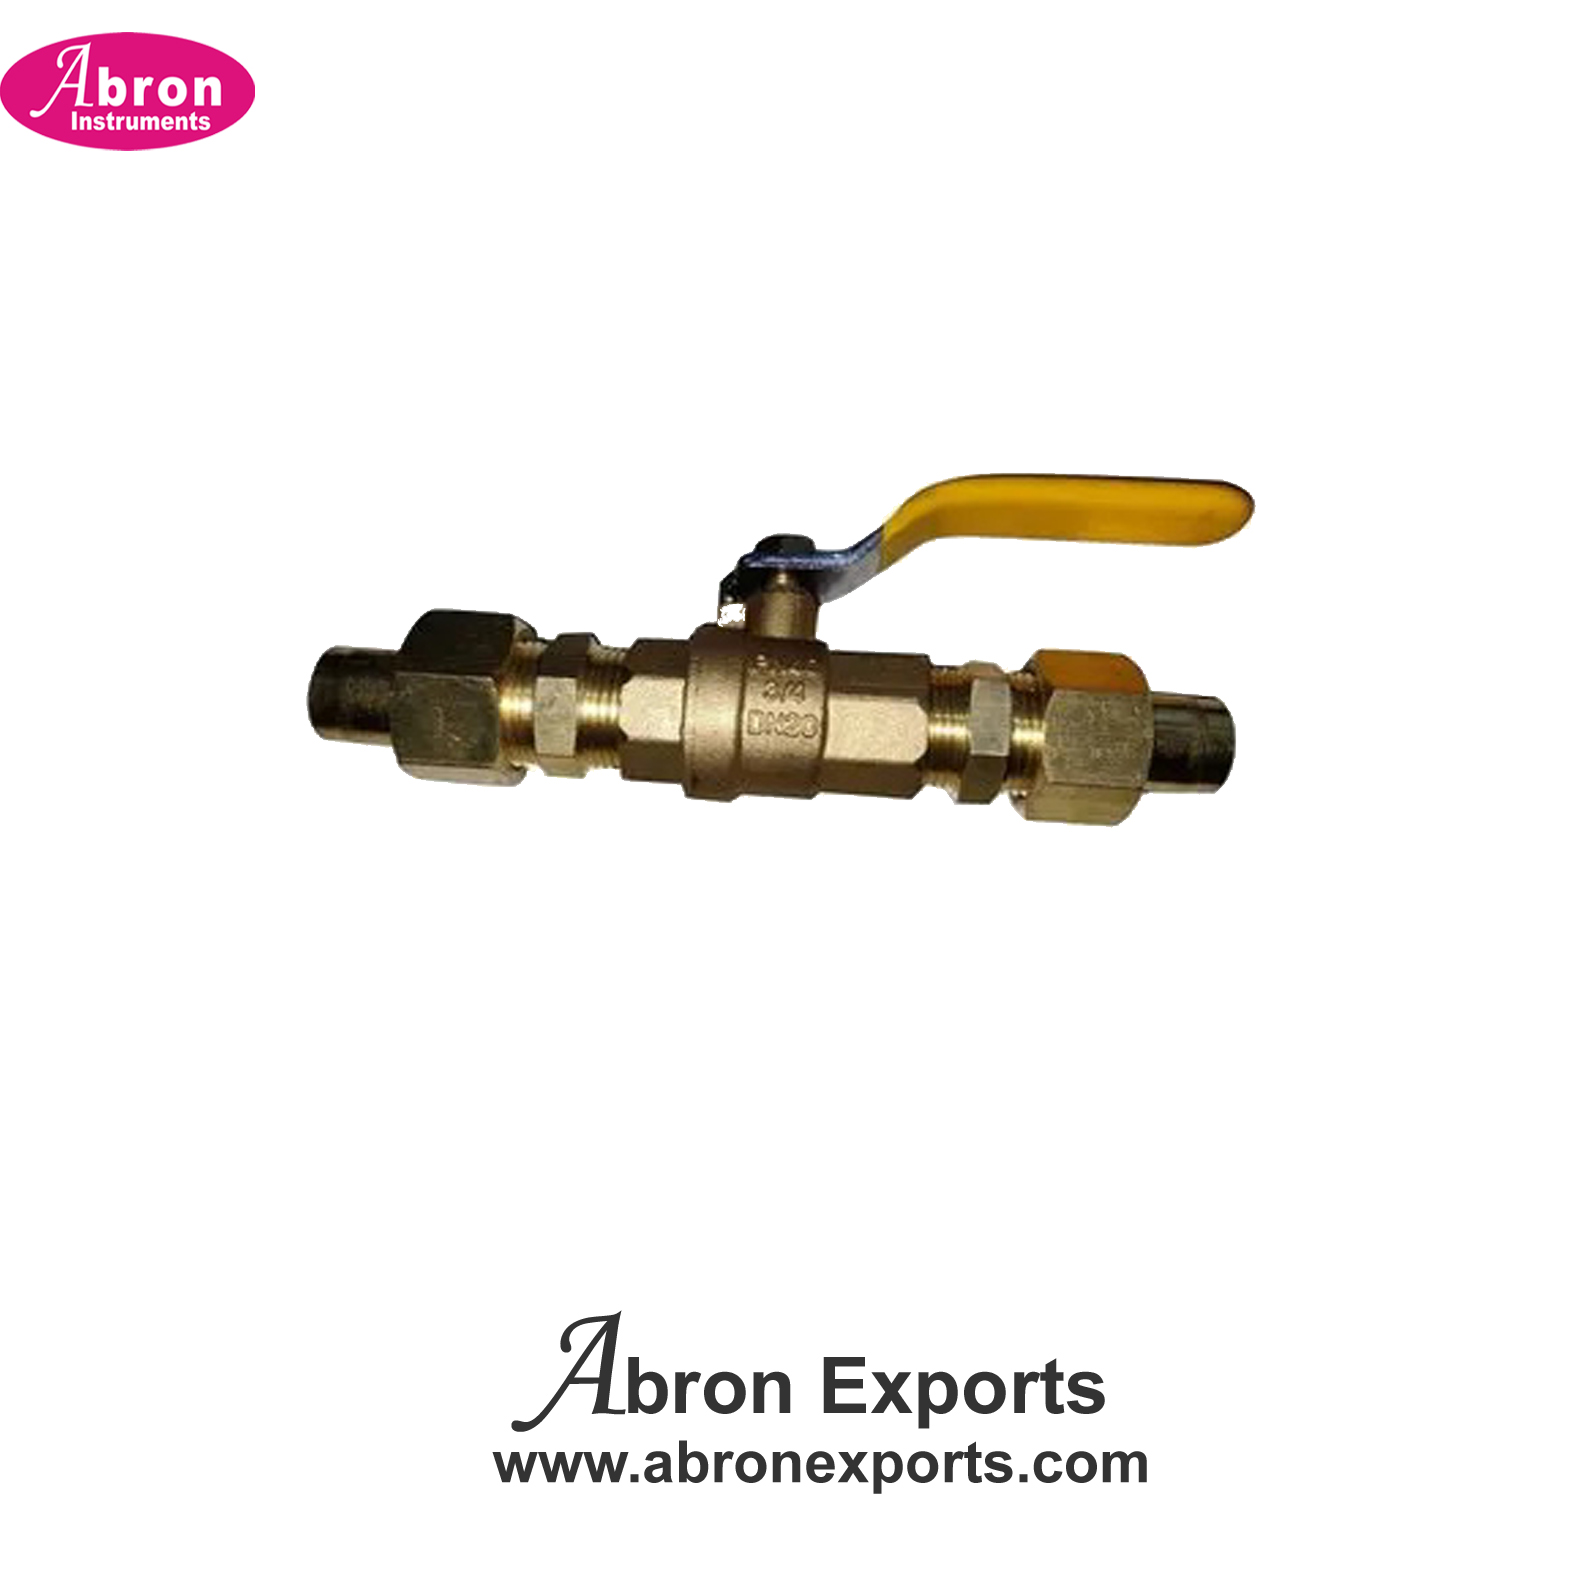 Medical Oxygen Air Pipe Line Brass Ball valve 28mm isolation valve 10pc Abron ABM-1123BV28 